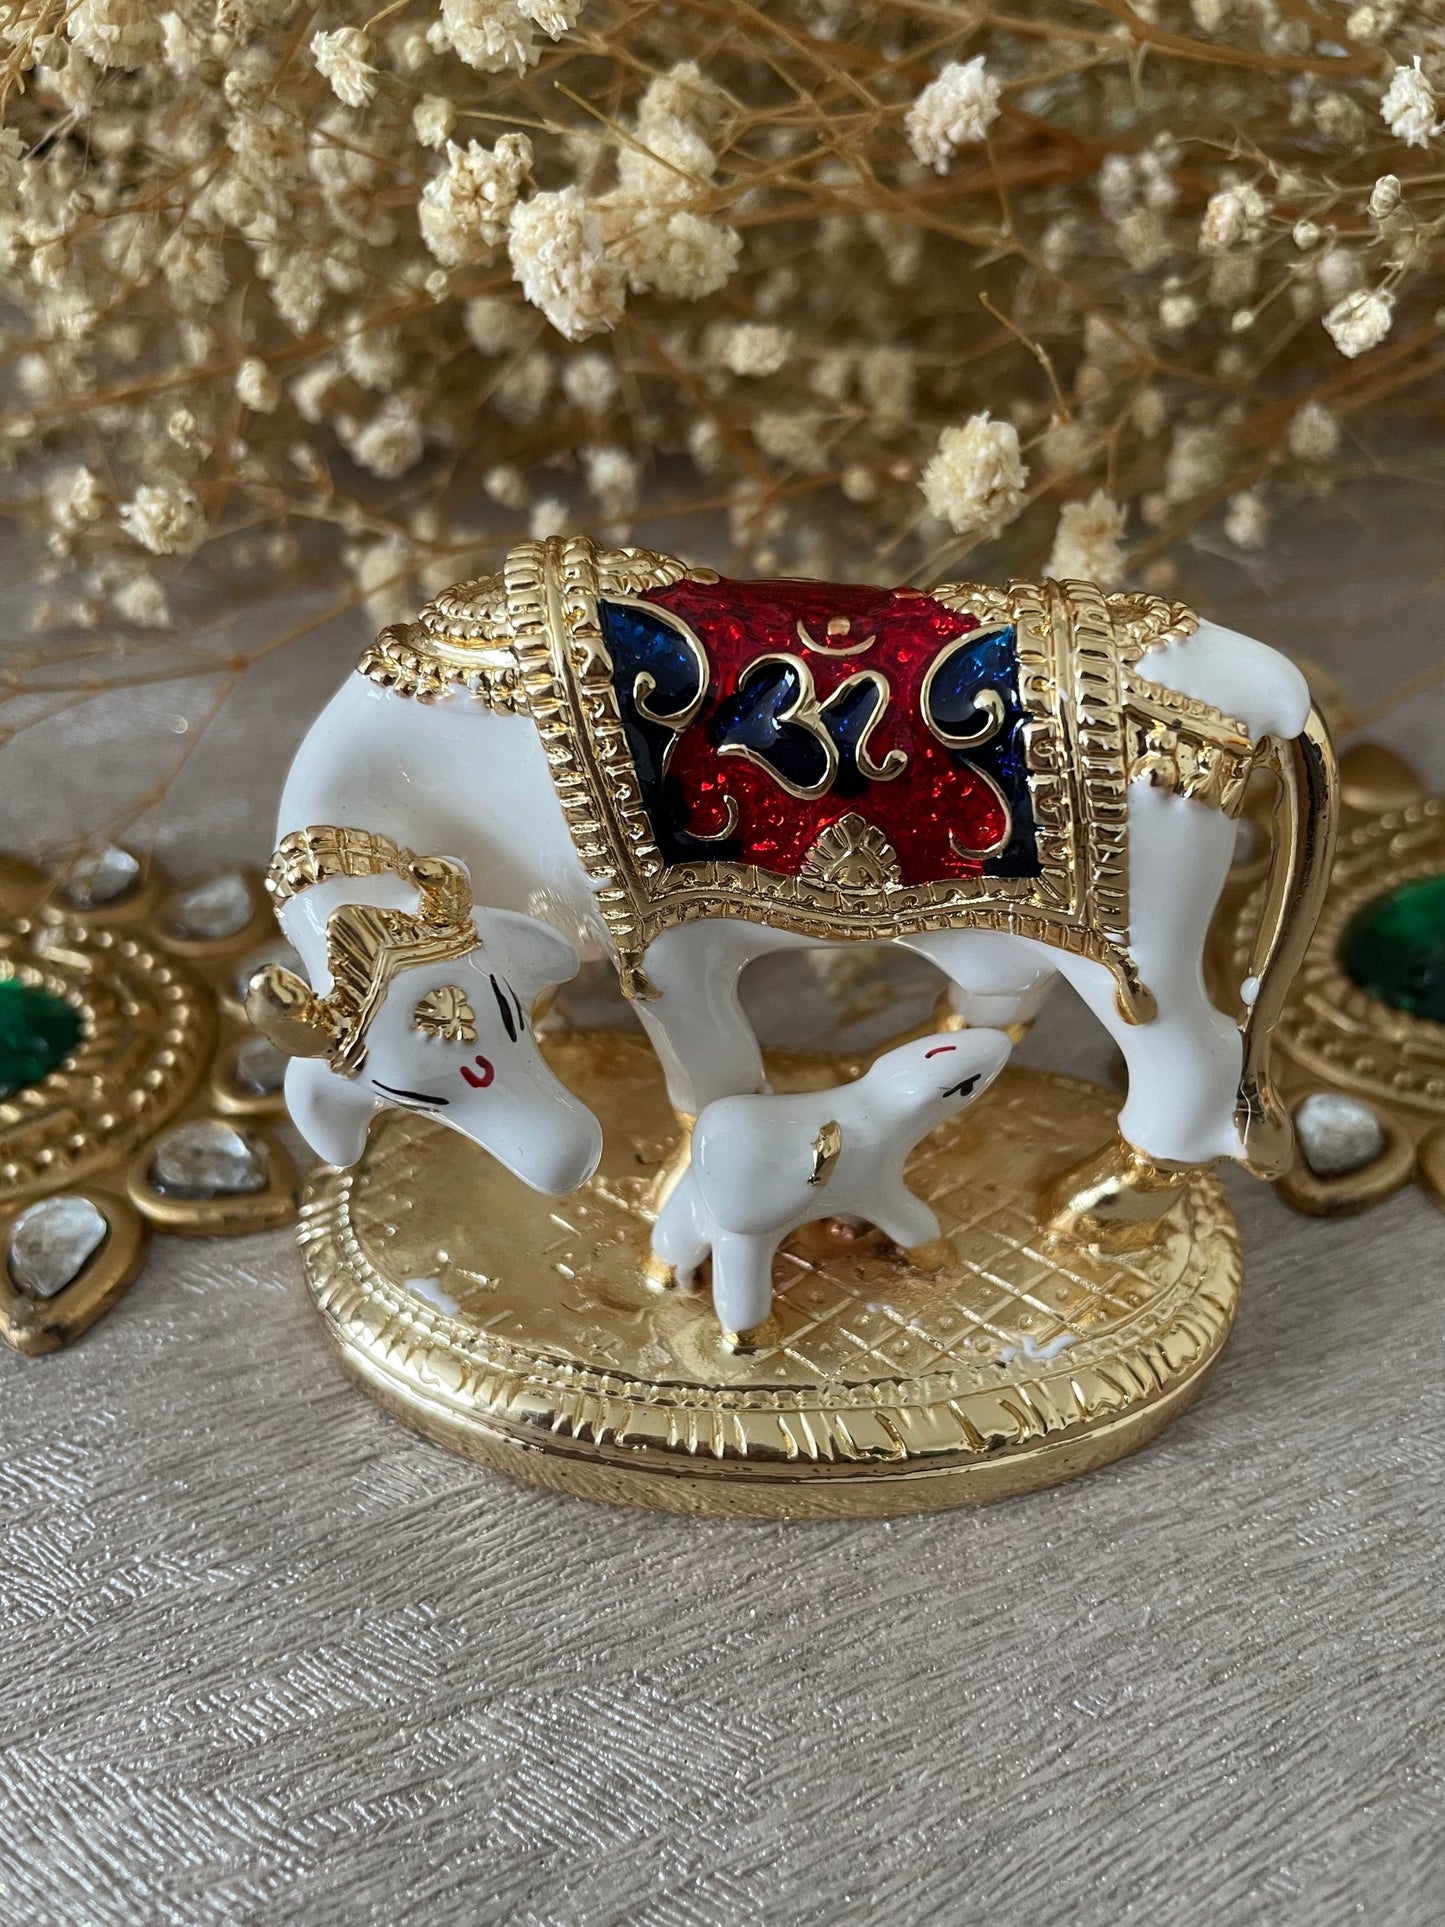 Kamdhenu Gai Cow and Calf Figurines Diwali Pooja| Shri Krishna | Govinda| The Cow Mother | Surabhi |Miraculous Diety of plenty